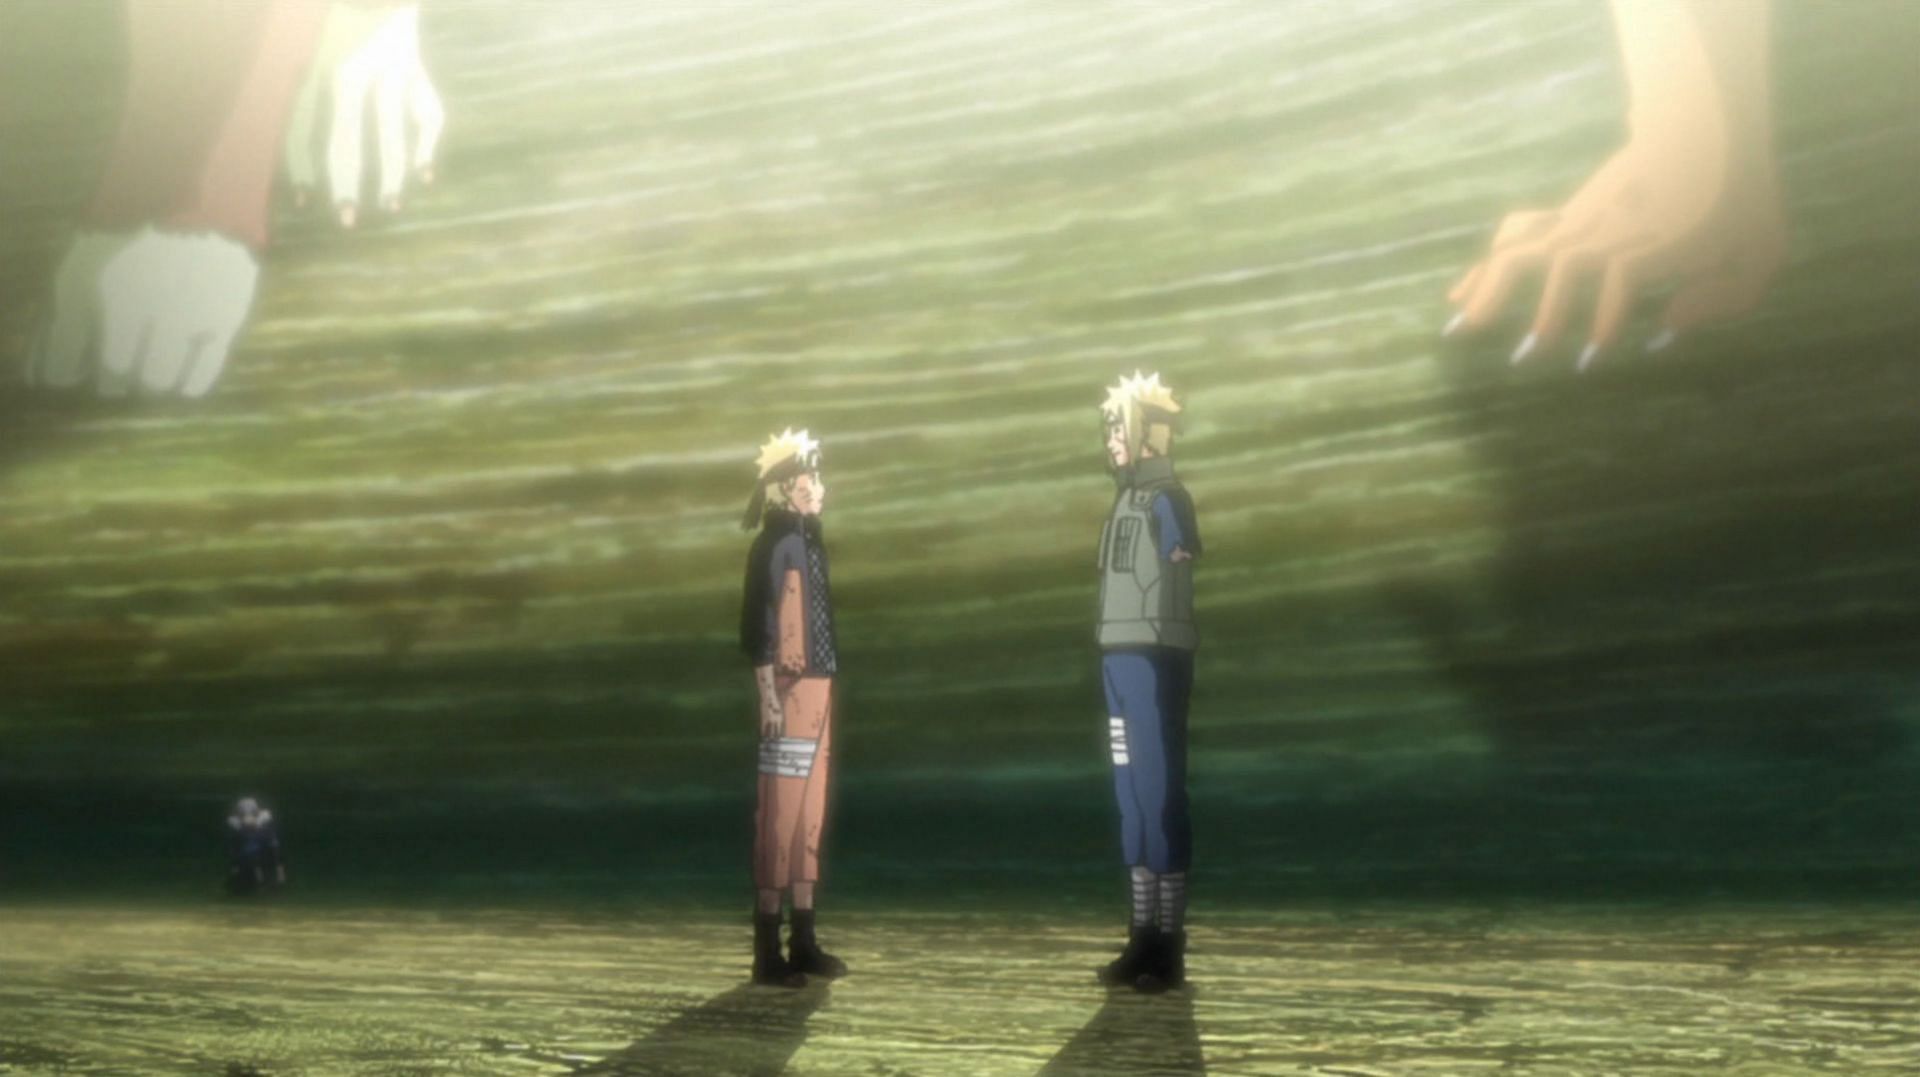 Naruto and Minato as seen in Naruto Shippuden (Image via Studio Pierrot)